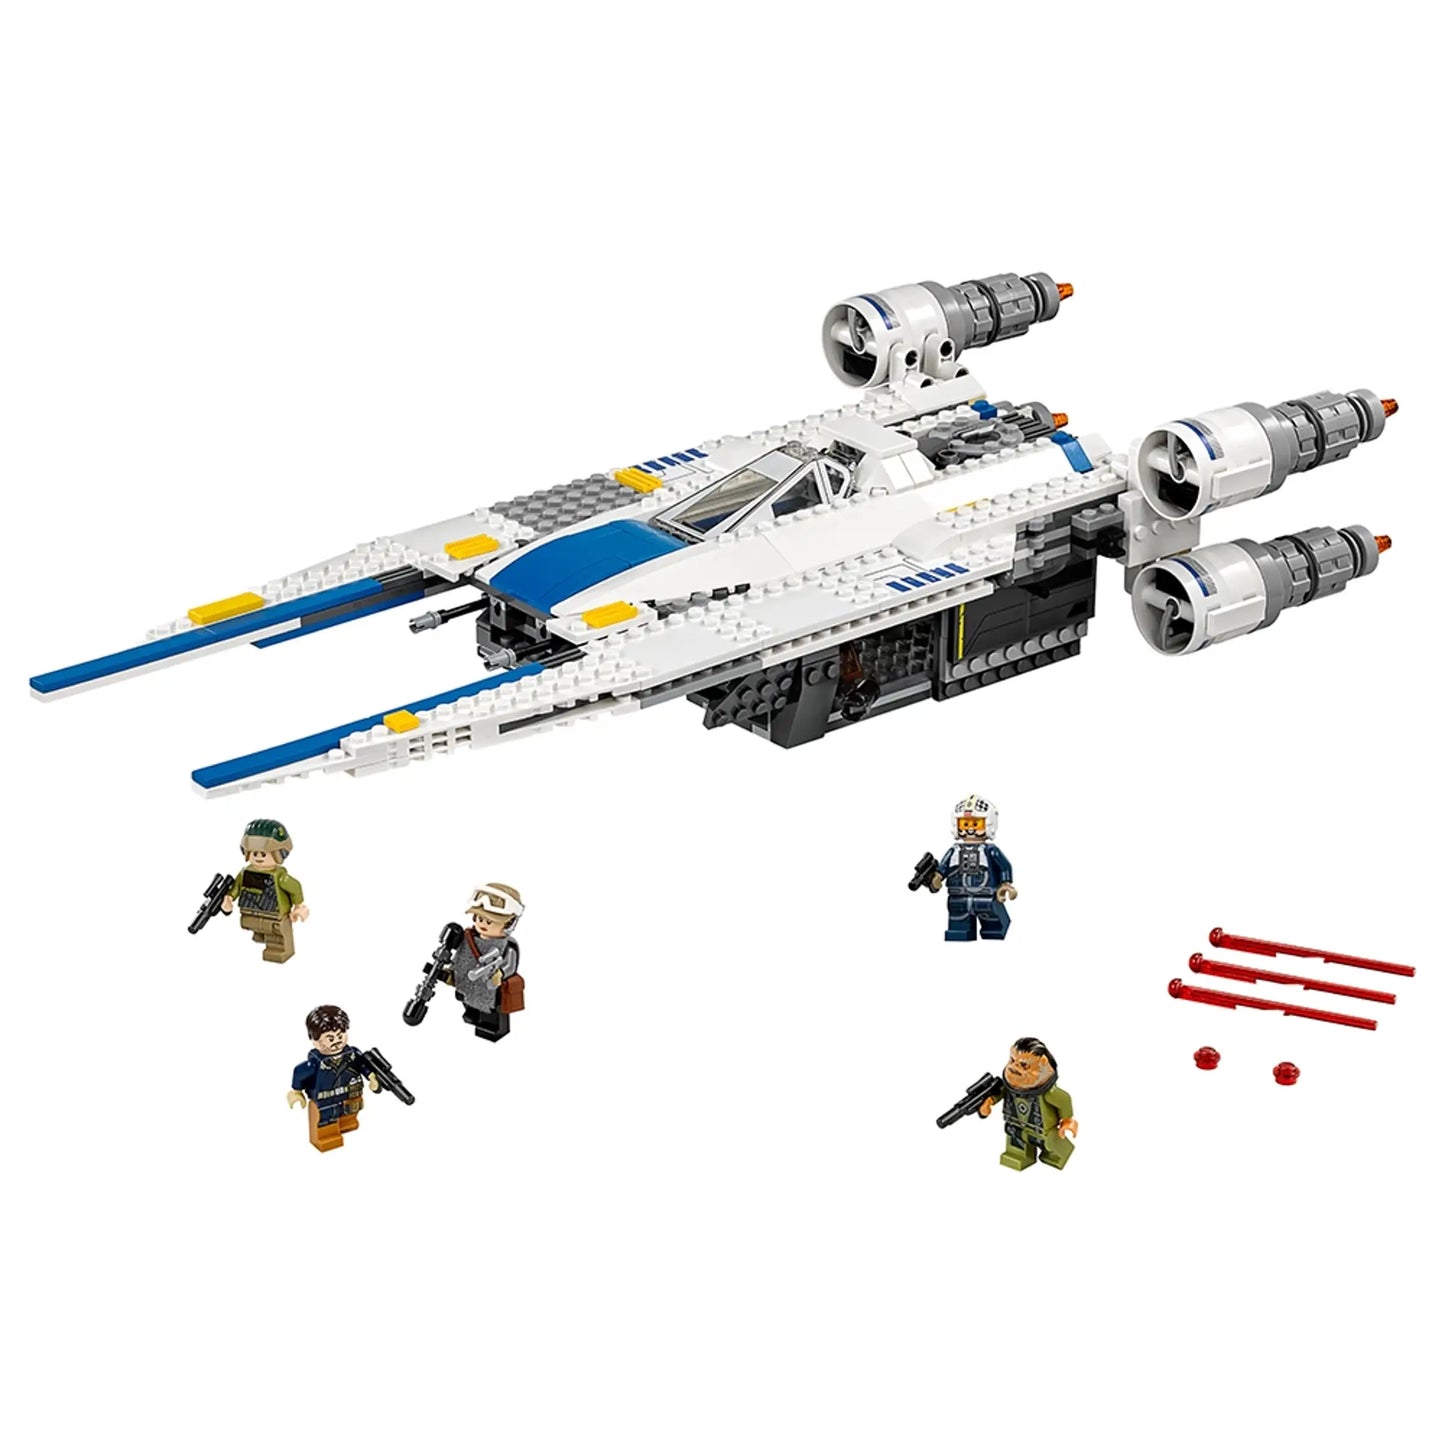 LEGO #75155 - Rebel U-Wing Fighter